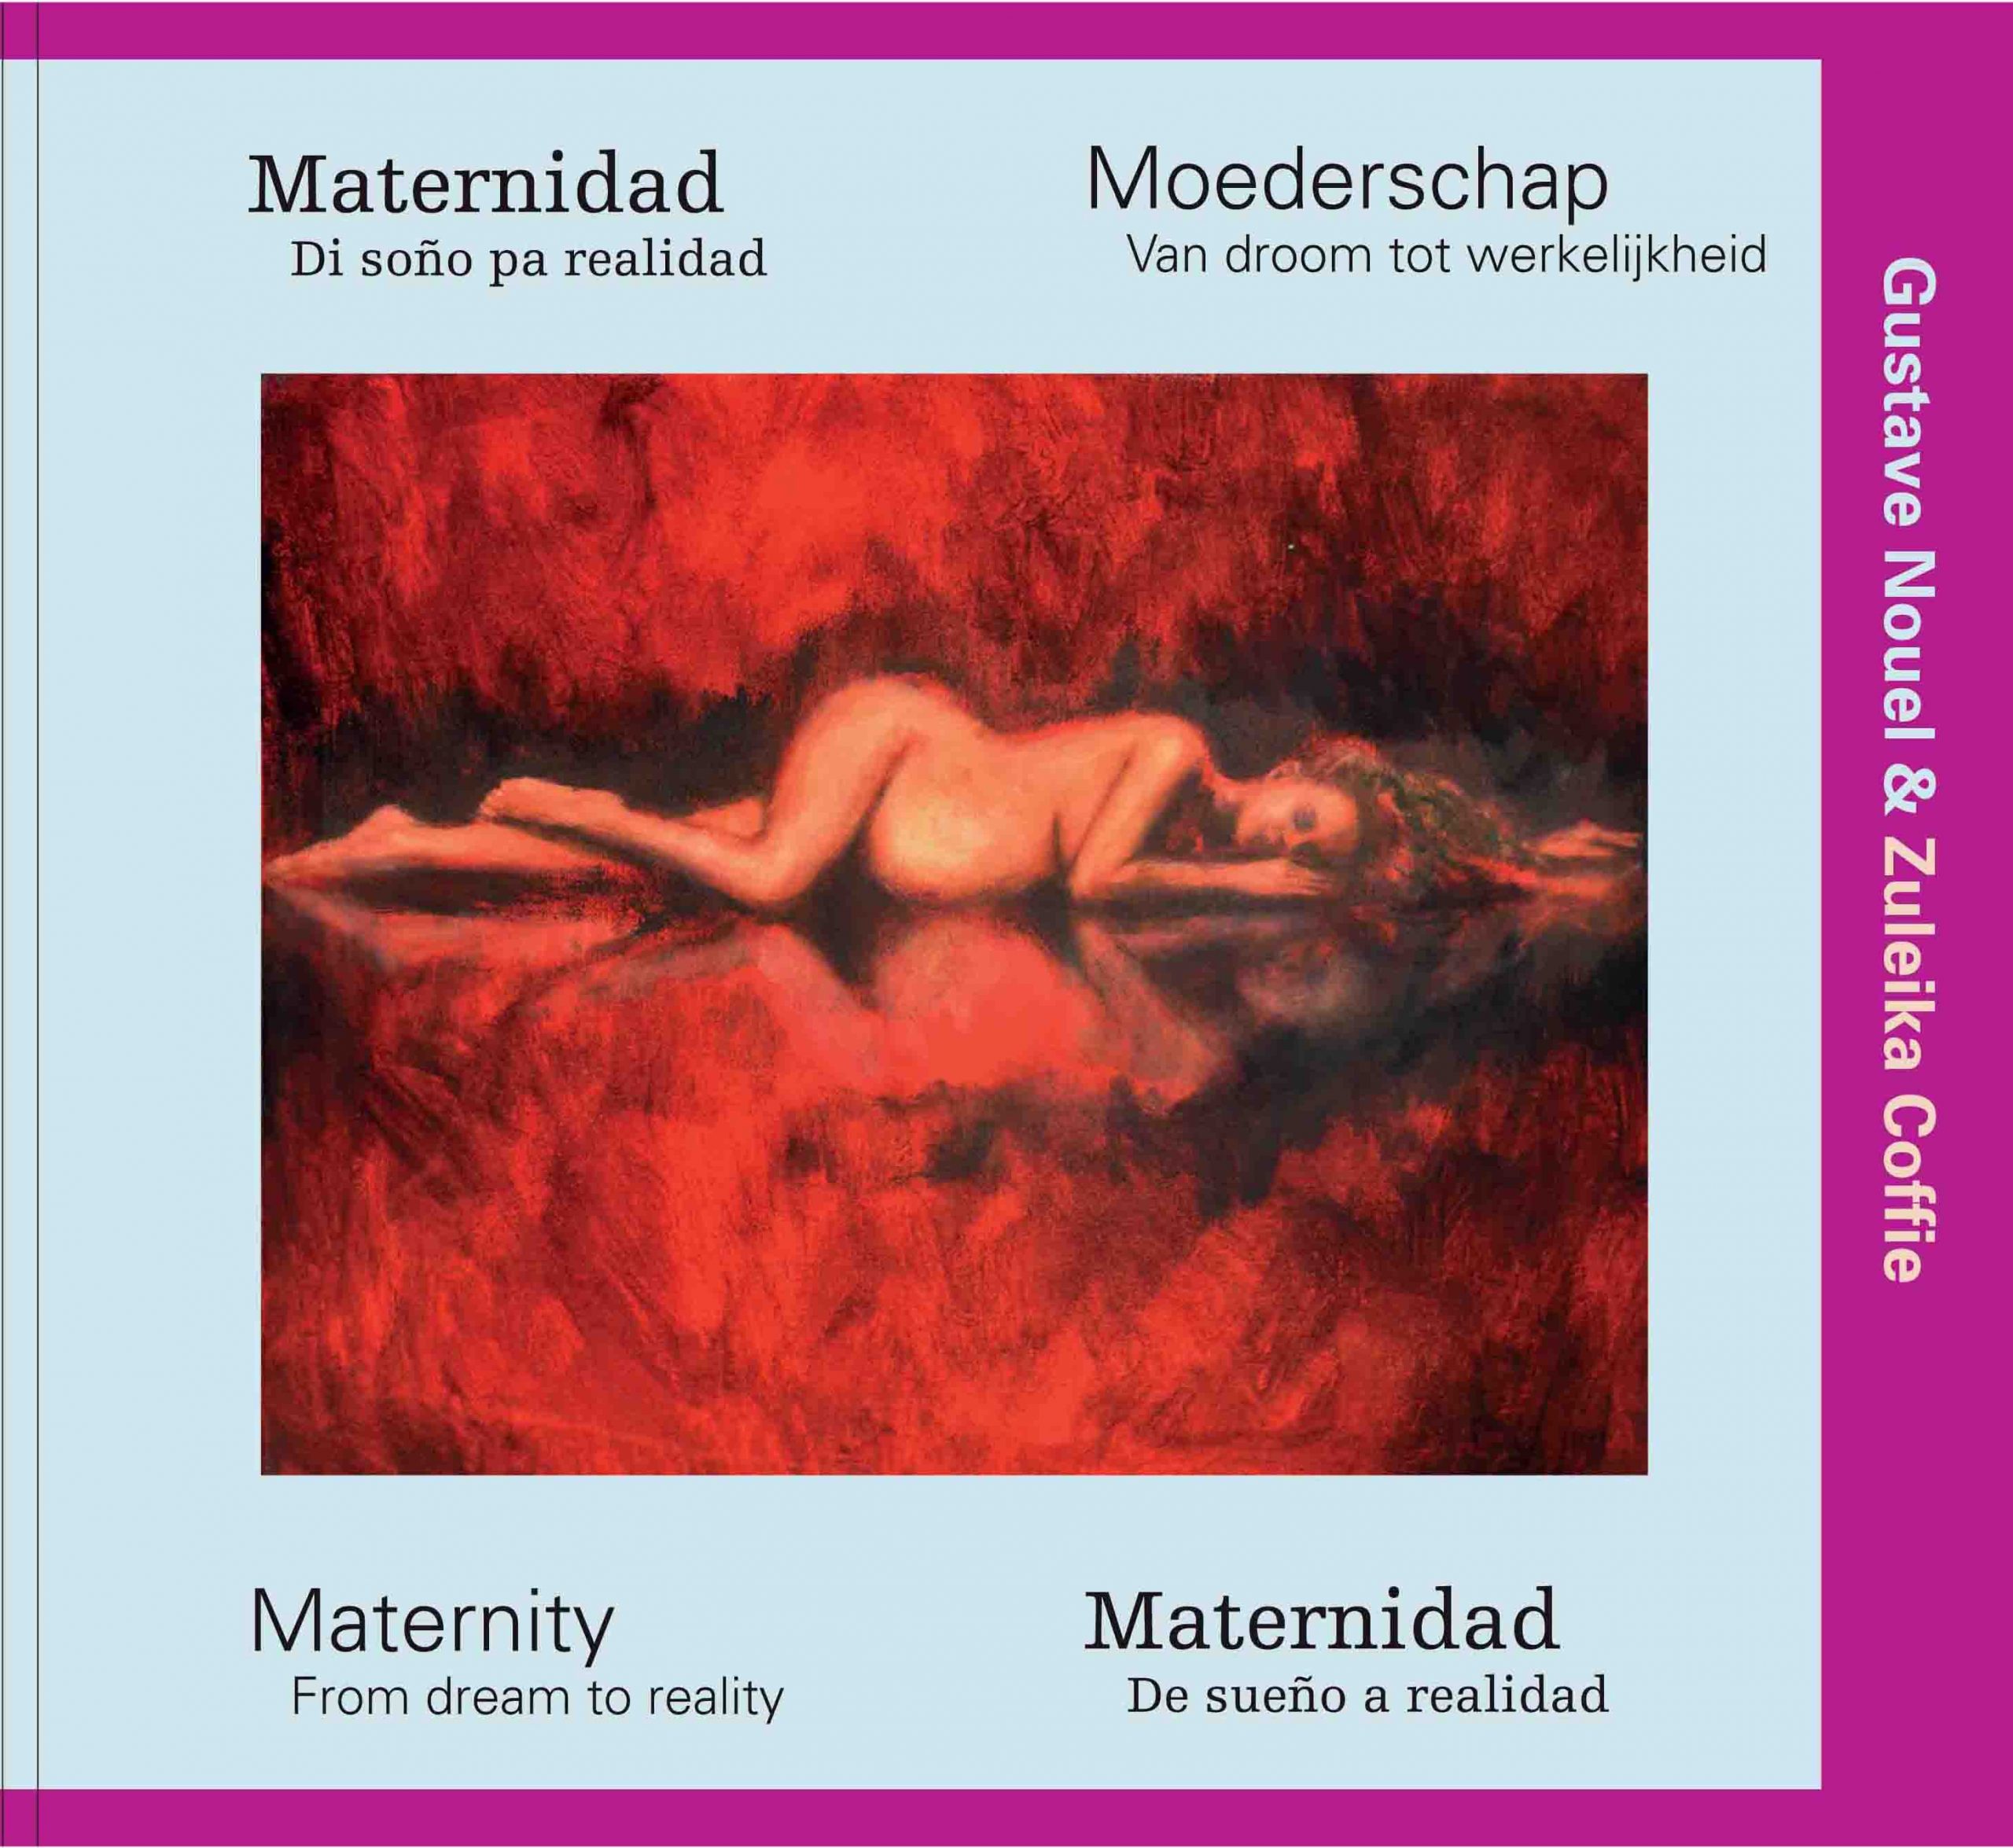 Moederschap Maternidad Maternity Scaled